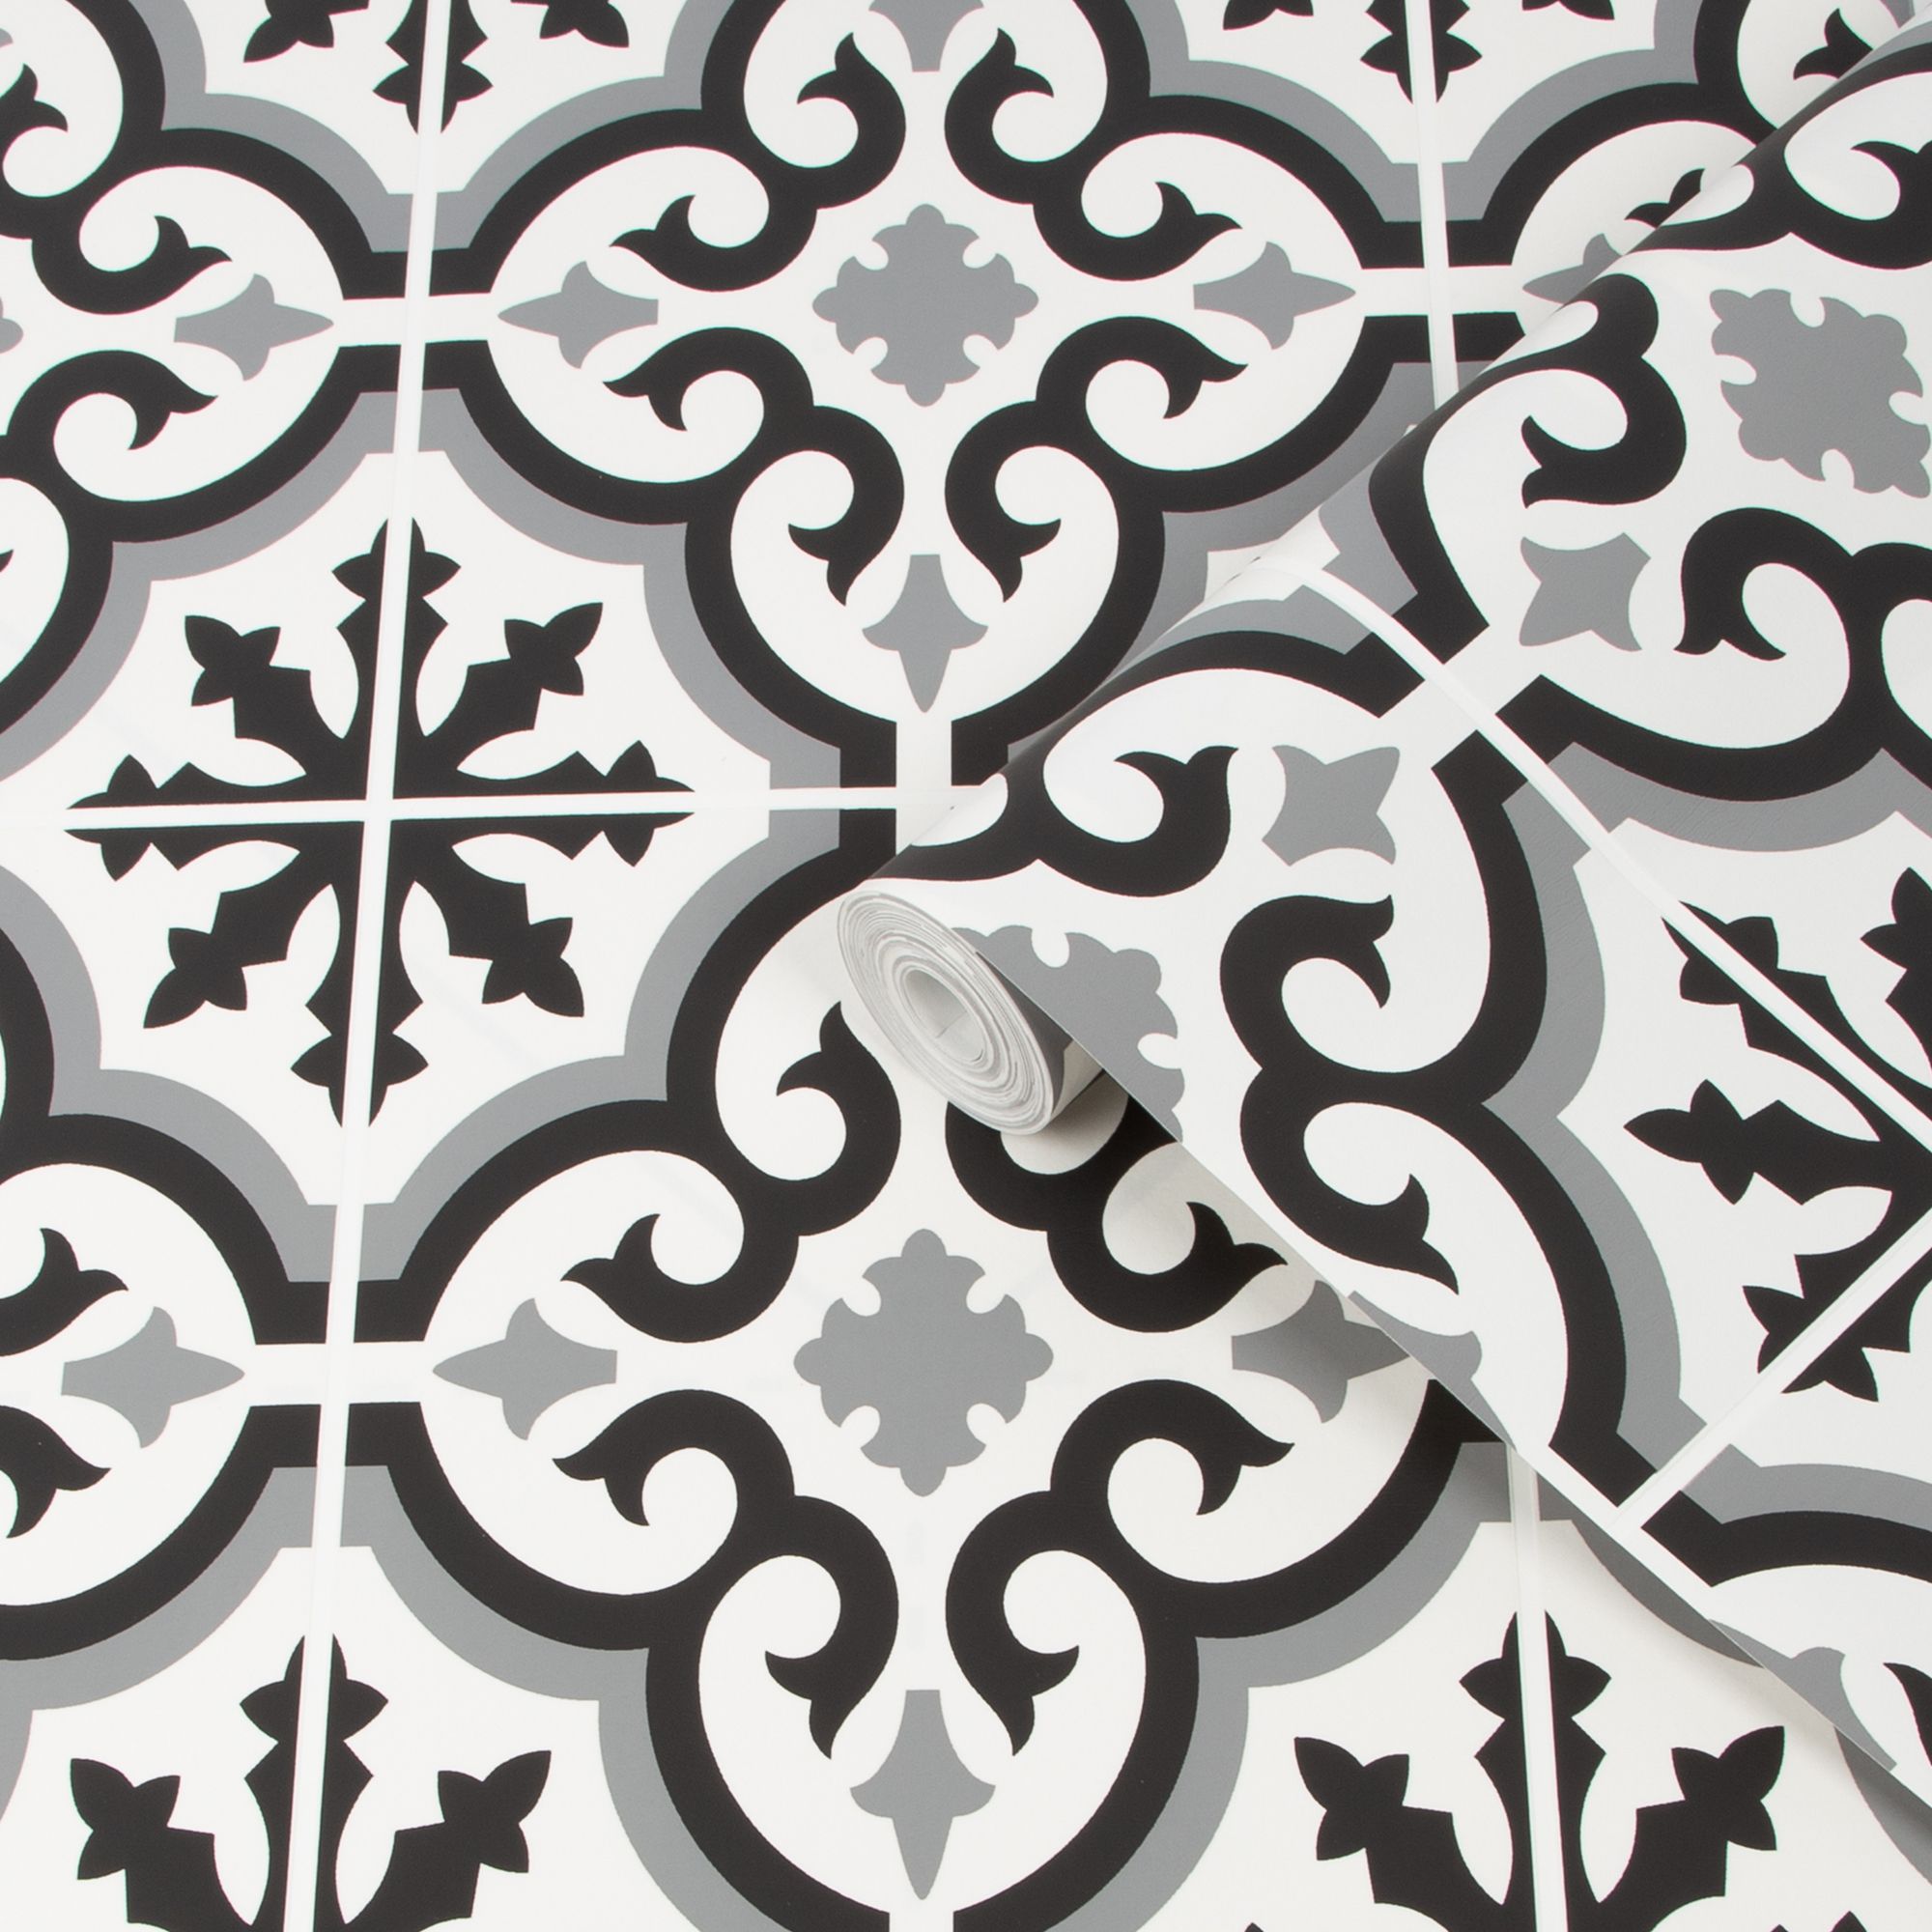 Contour Grecian Black & white Tile effect Textured Wallpaper Sample